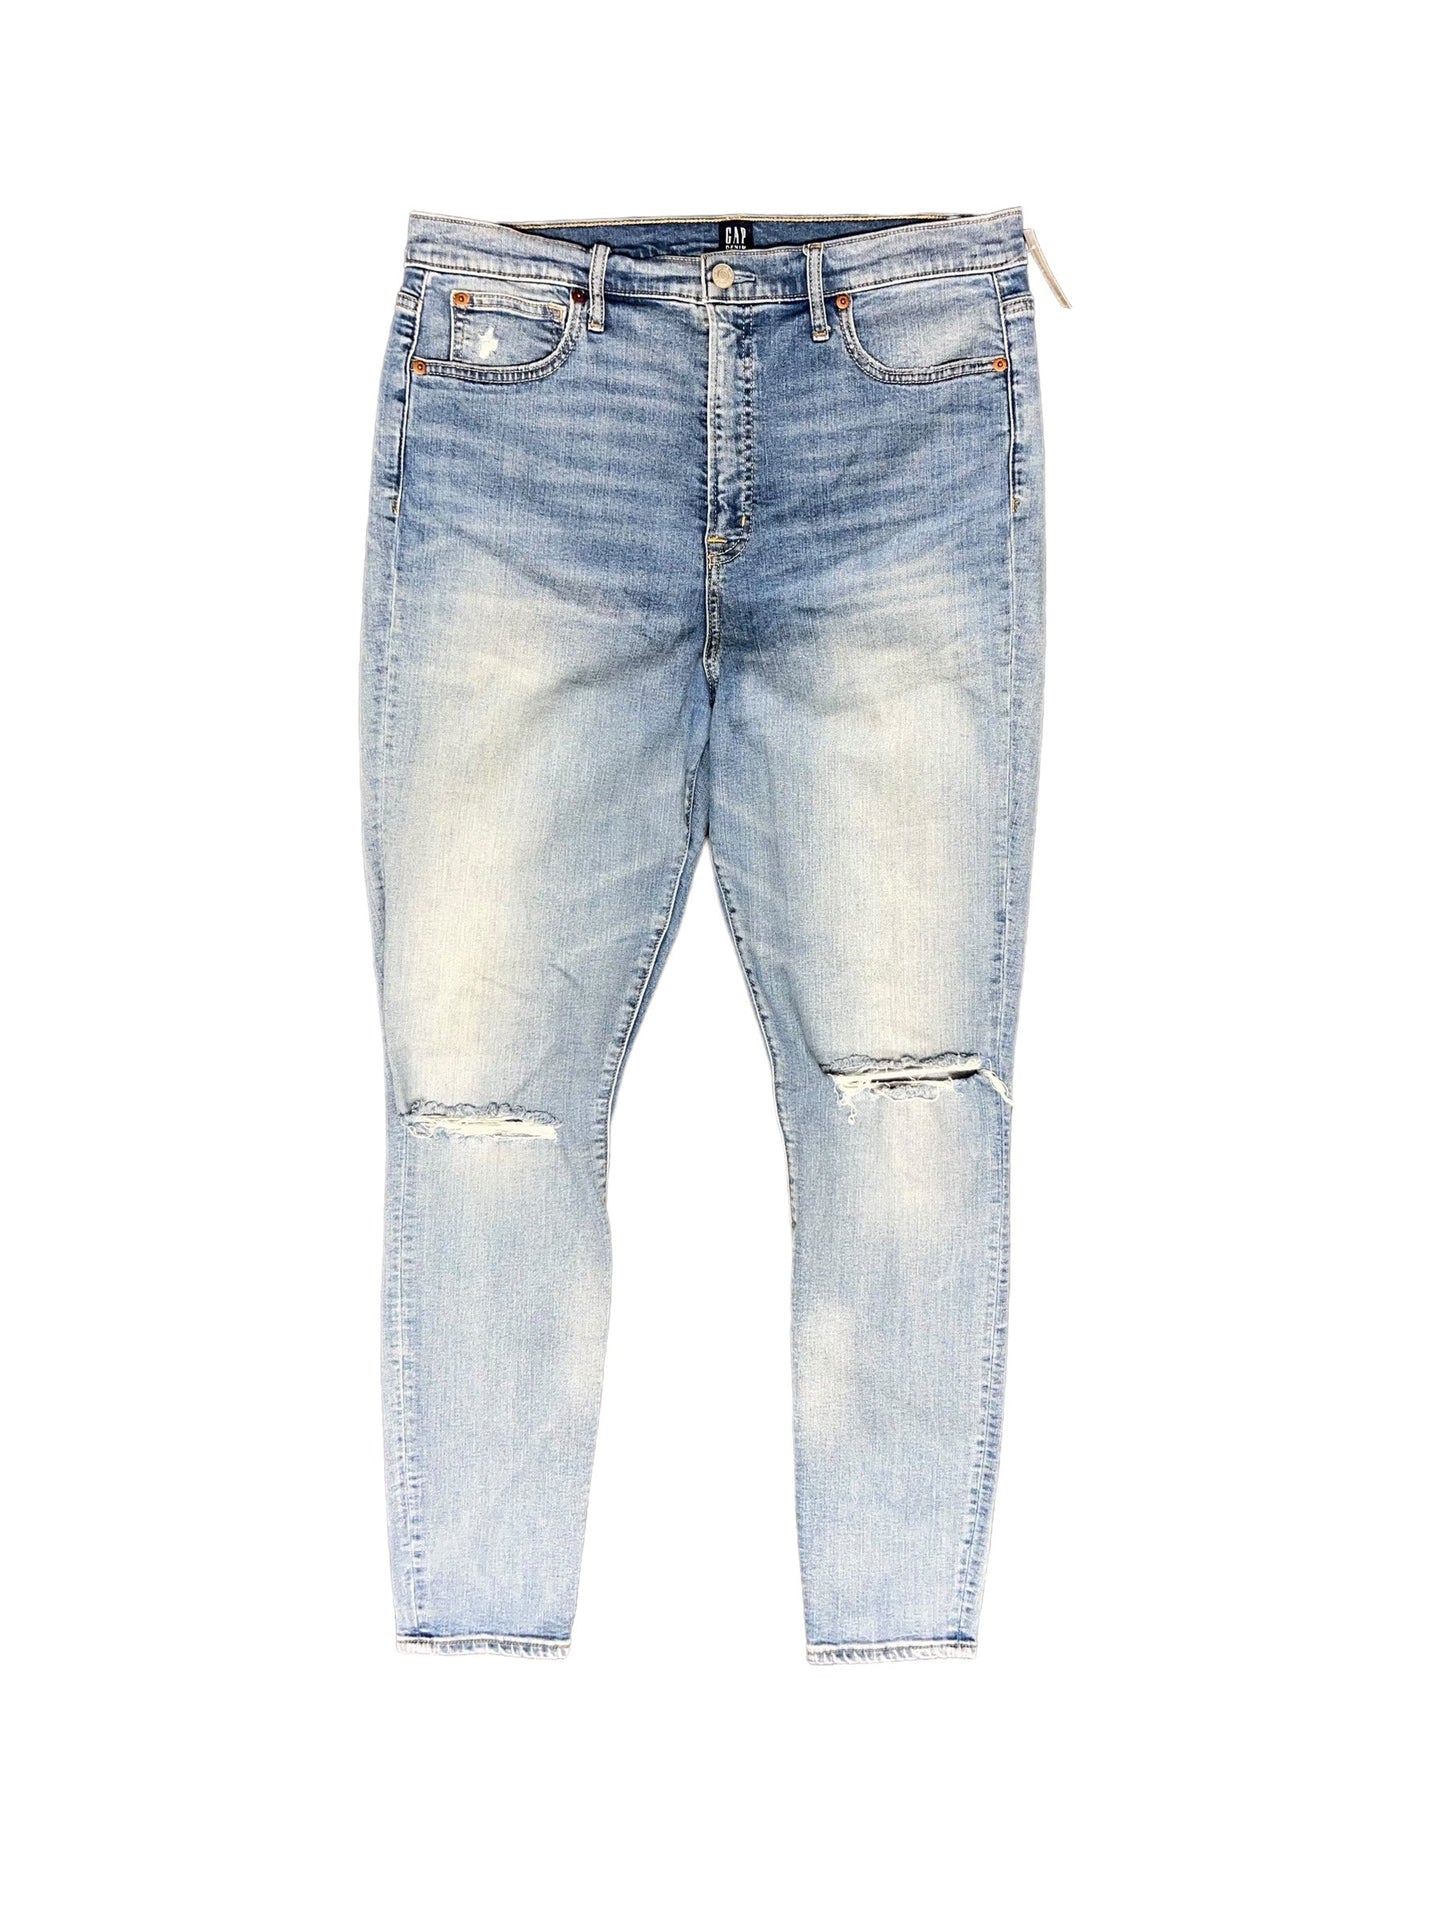 Jeans Skinny By Gap  Size: 16